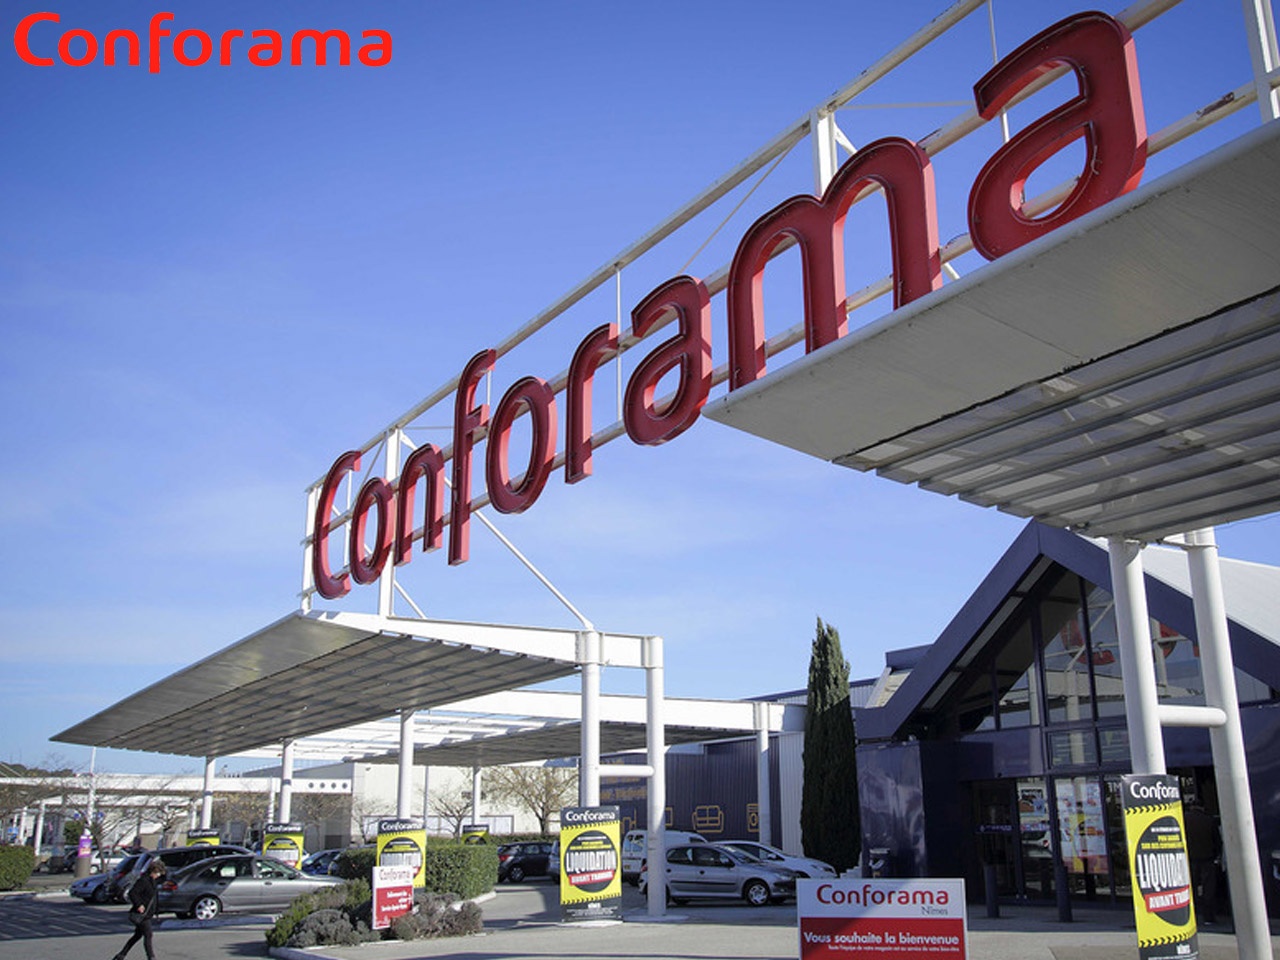 Conforama annonce la fermeture de 42 magasins, impliquant la suppression de 1900 postes